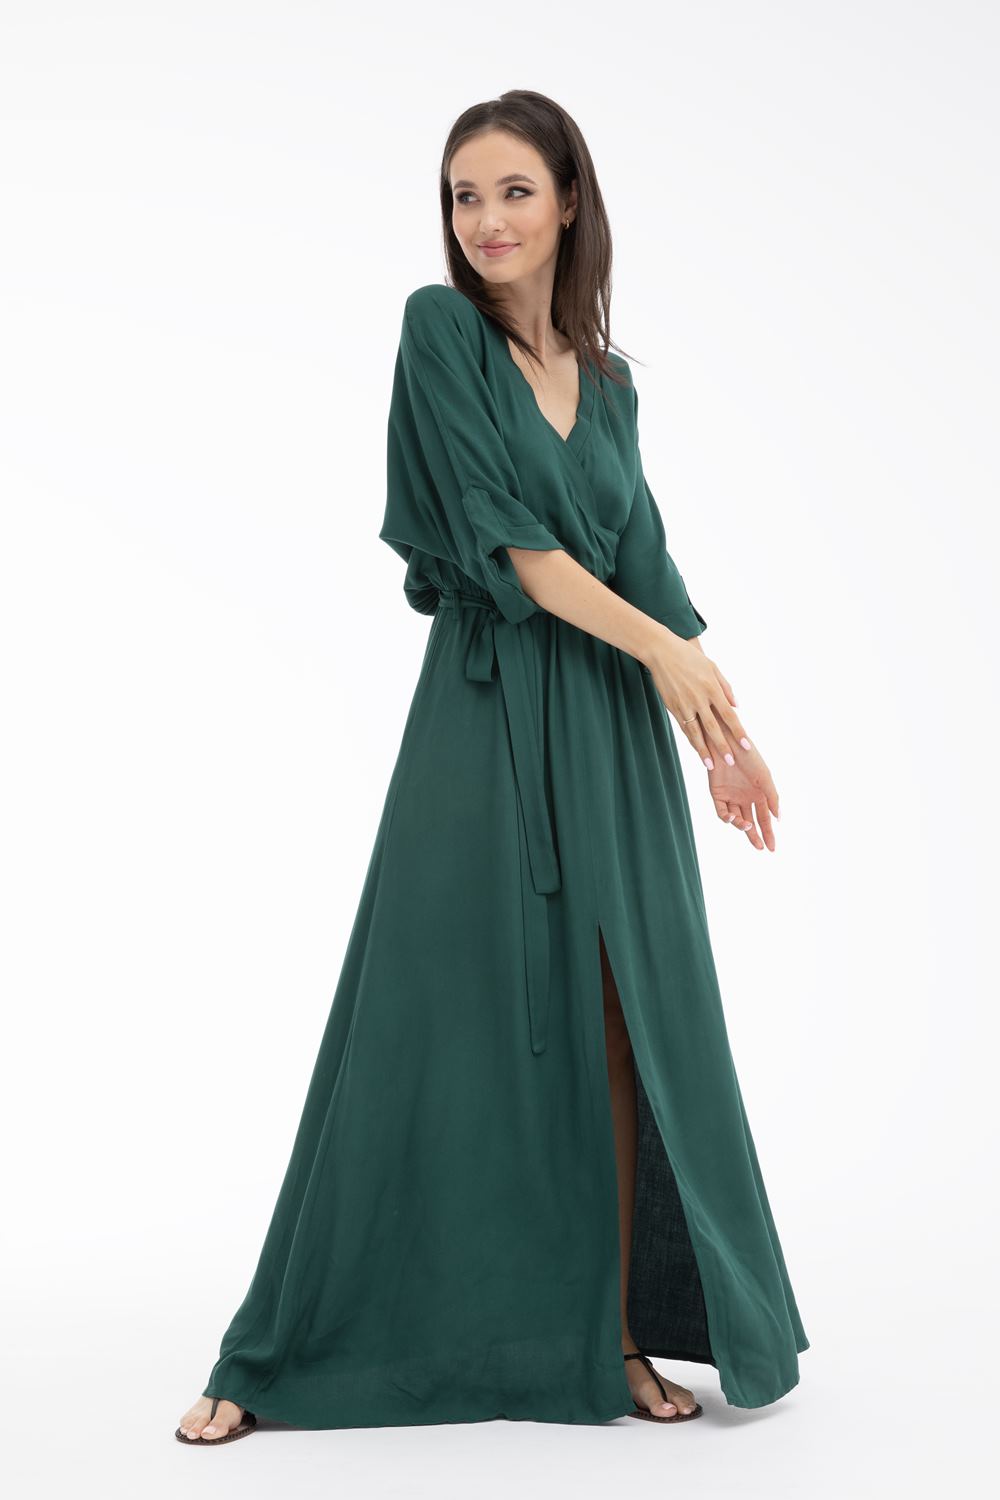 Emerald Dream long dress with binding